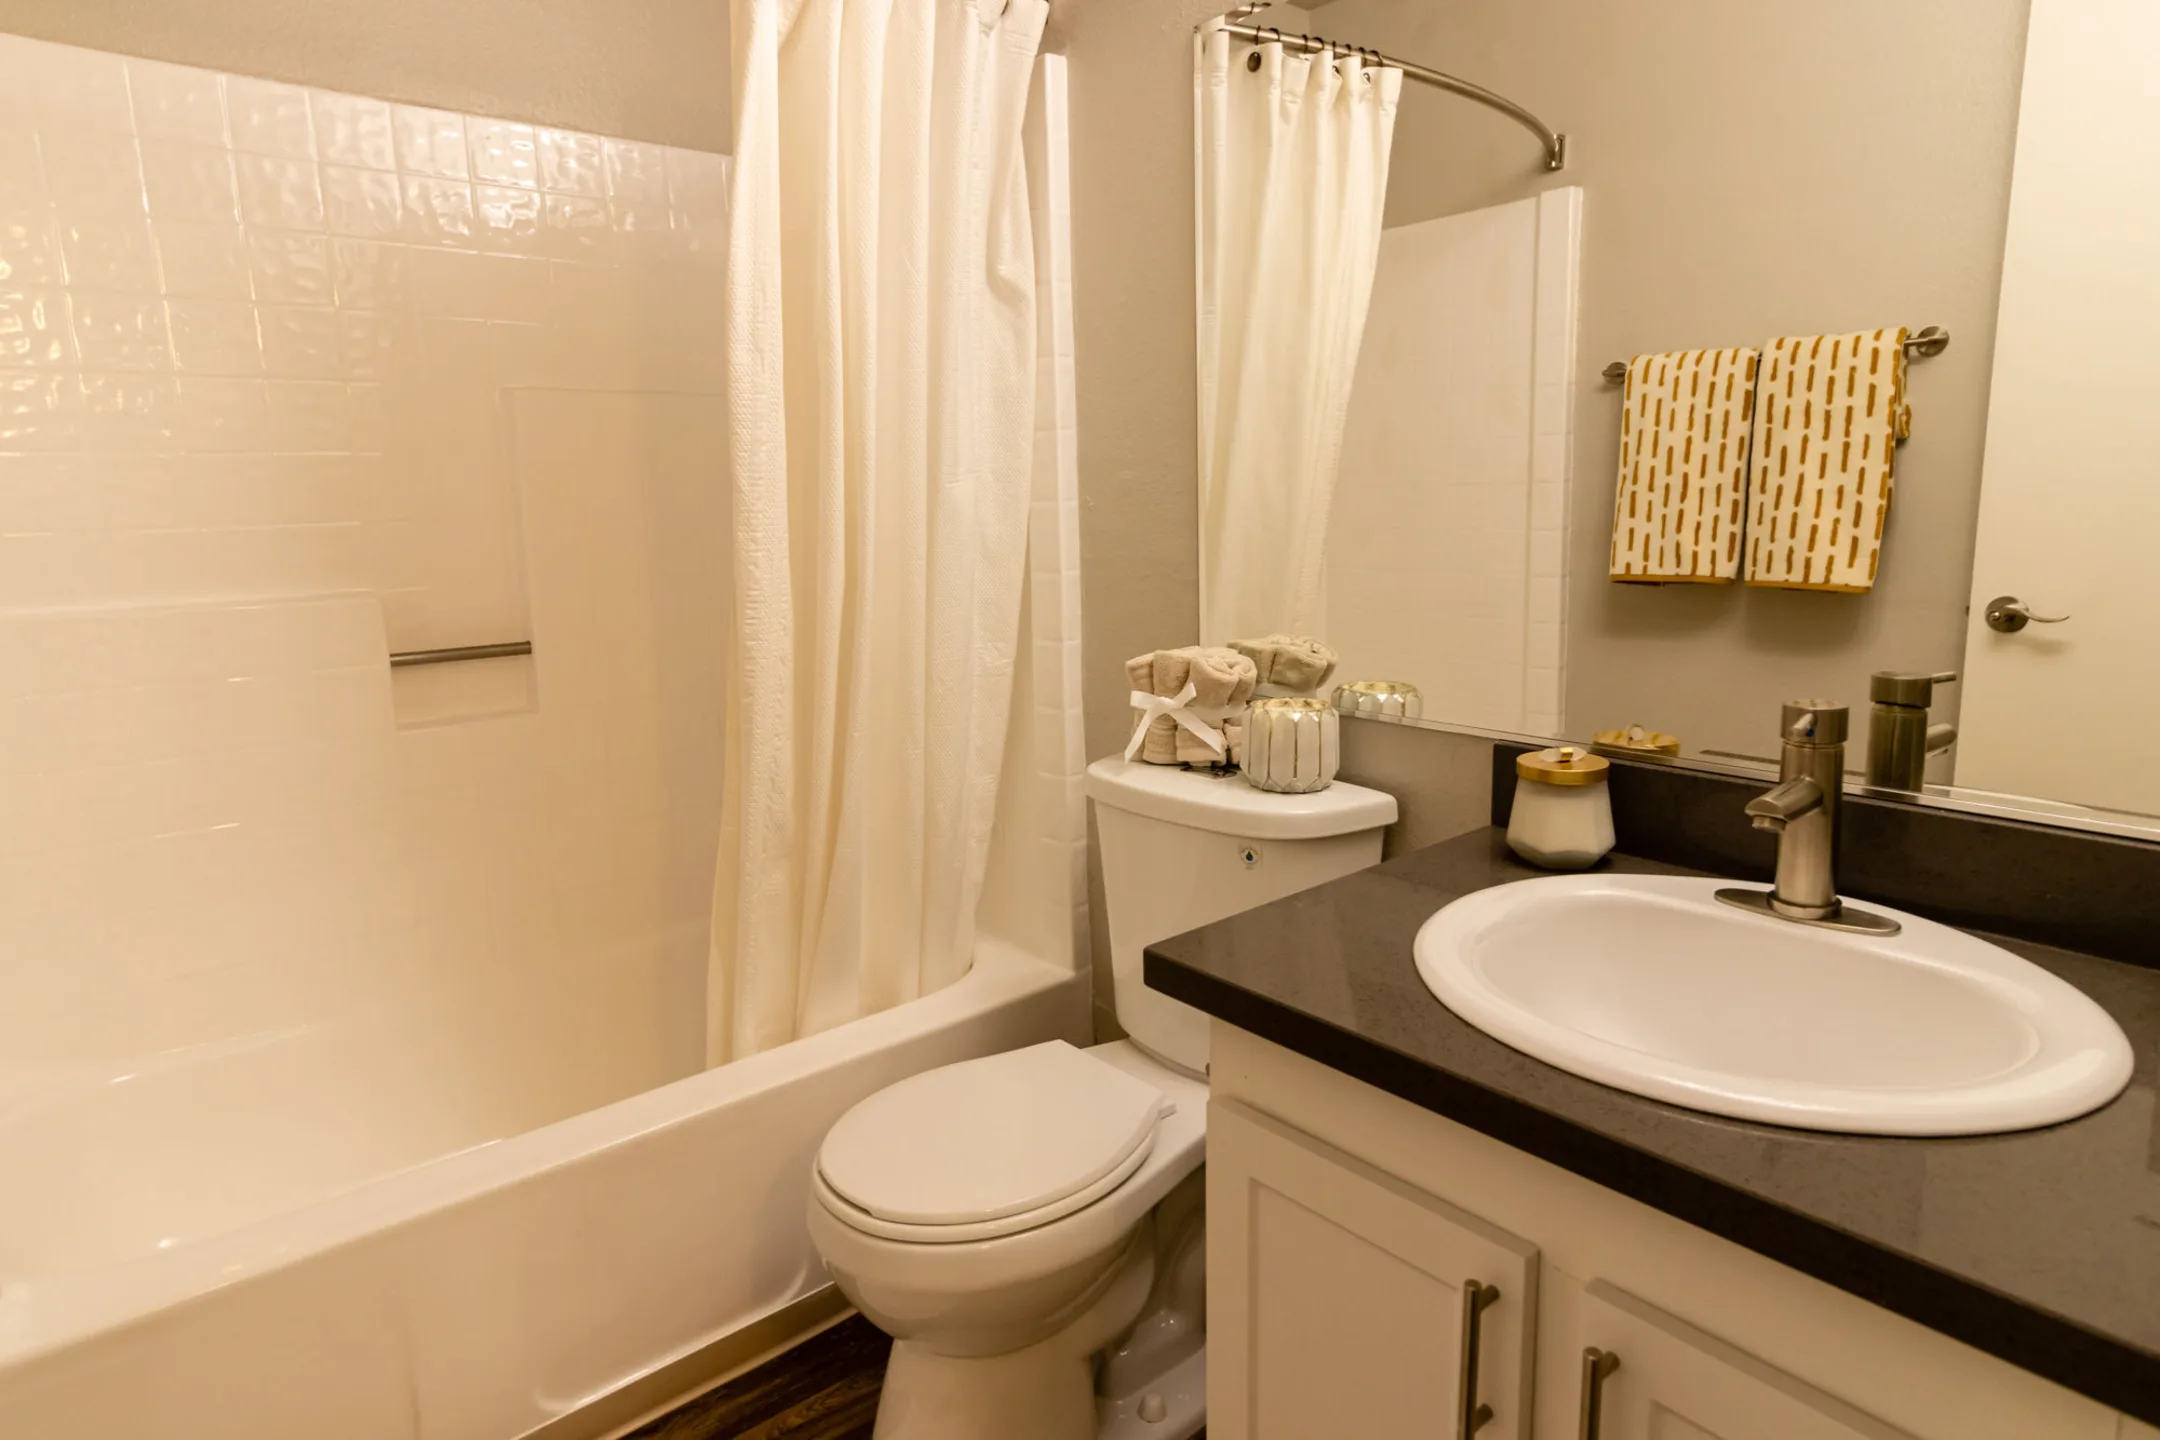 Bathroom - The Verge Apartments - Reno, NV